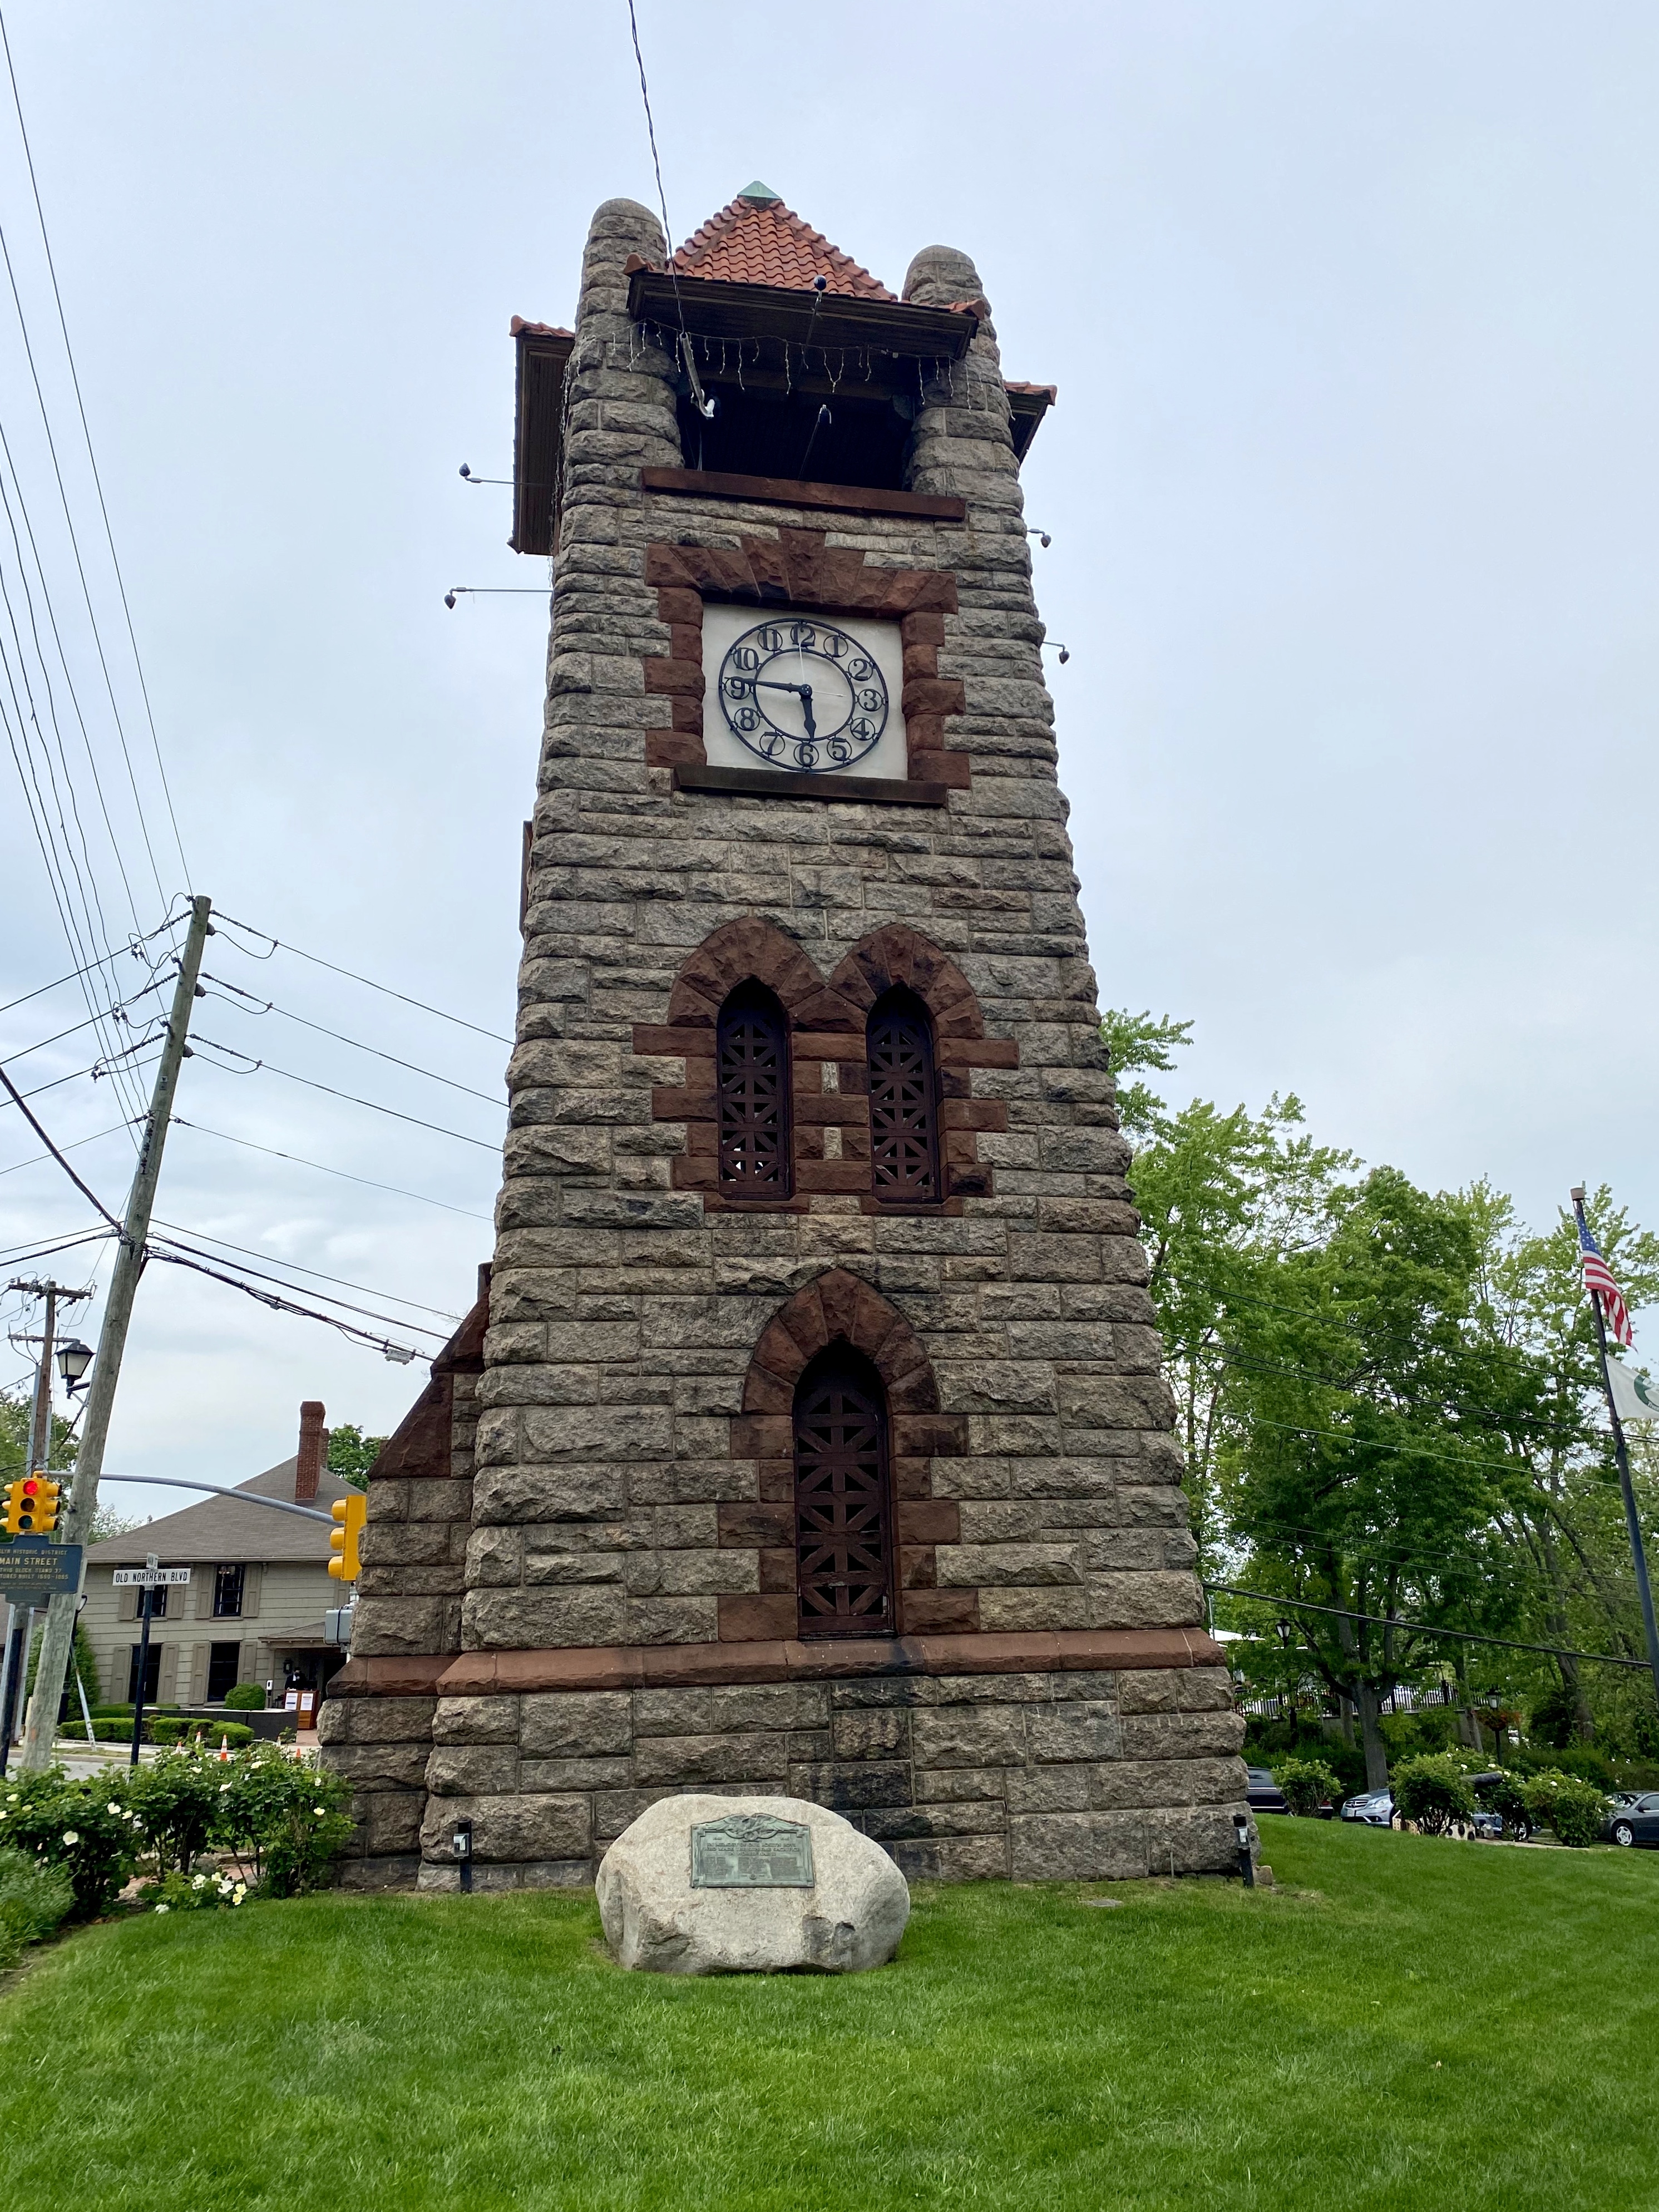 Roslyn World War II Memorial and Clock Tower